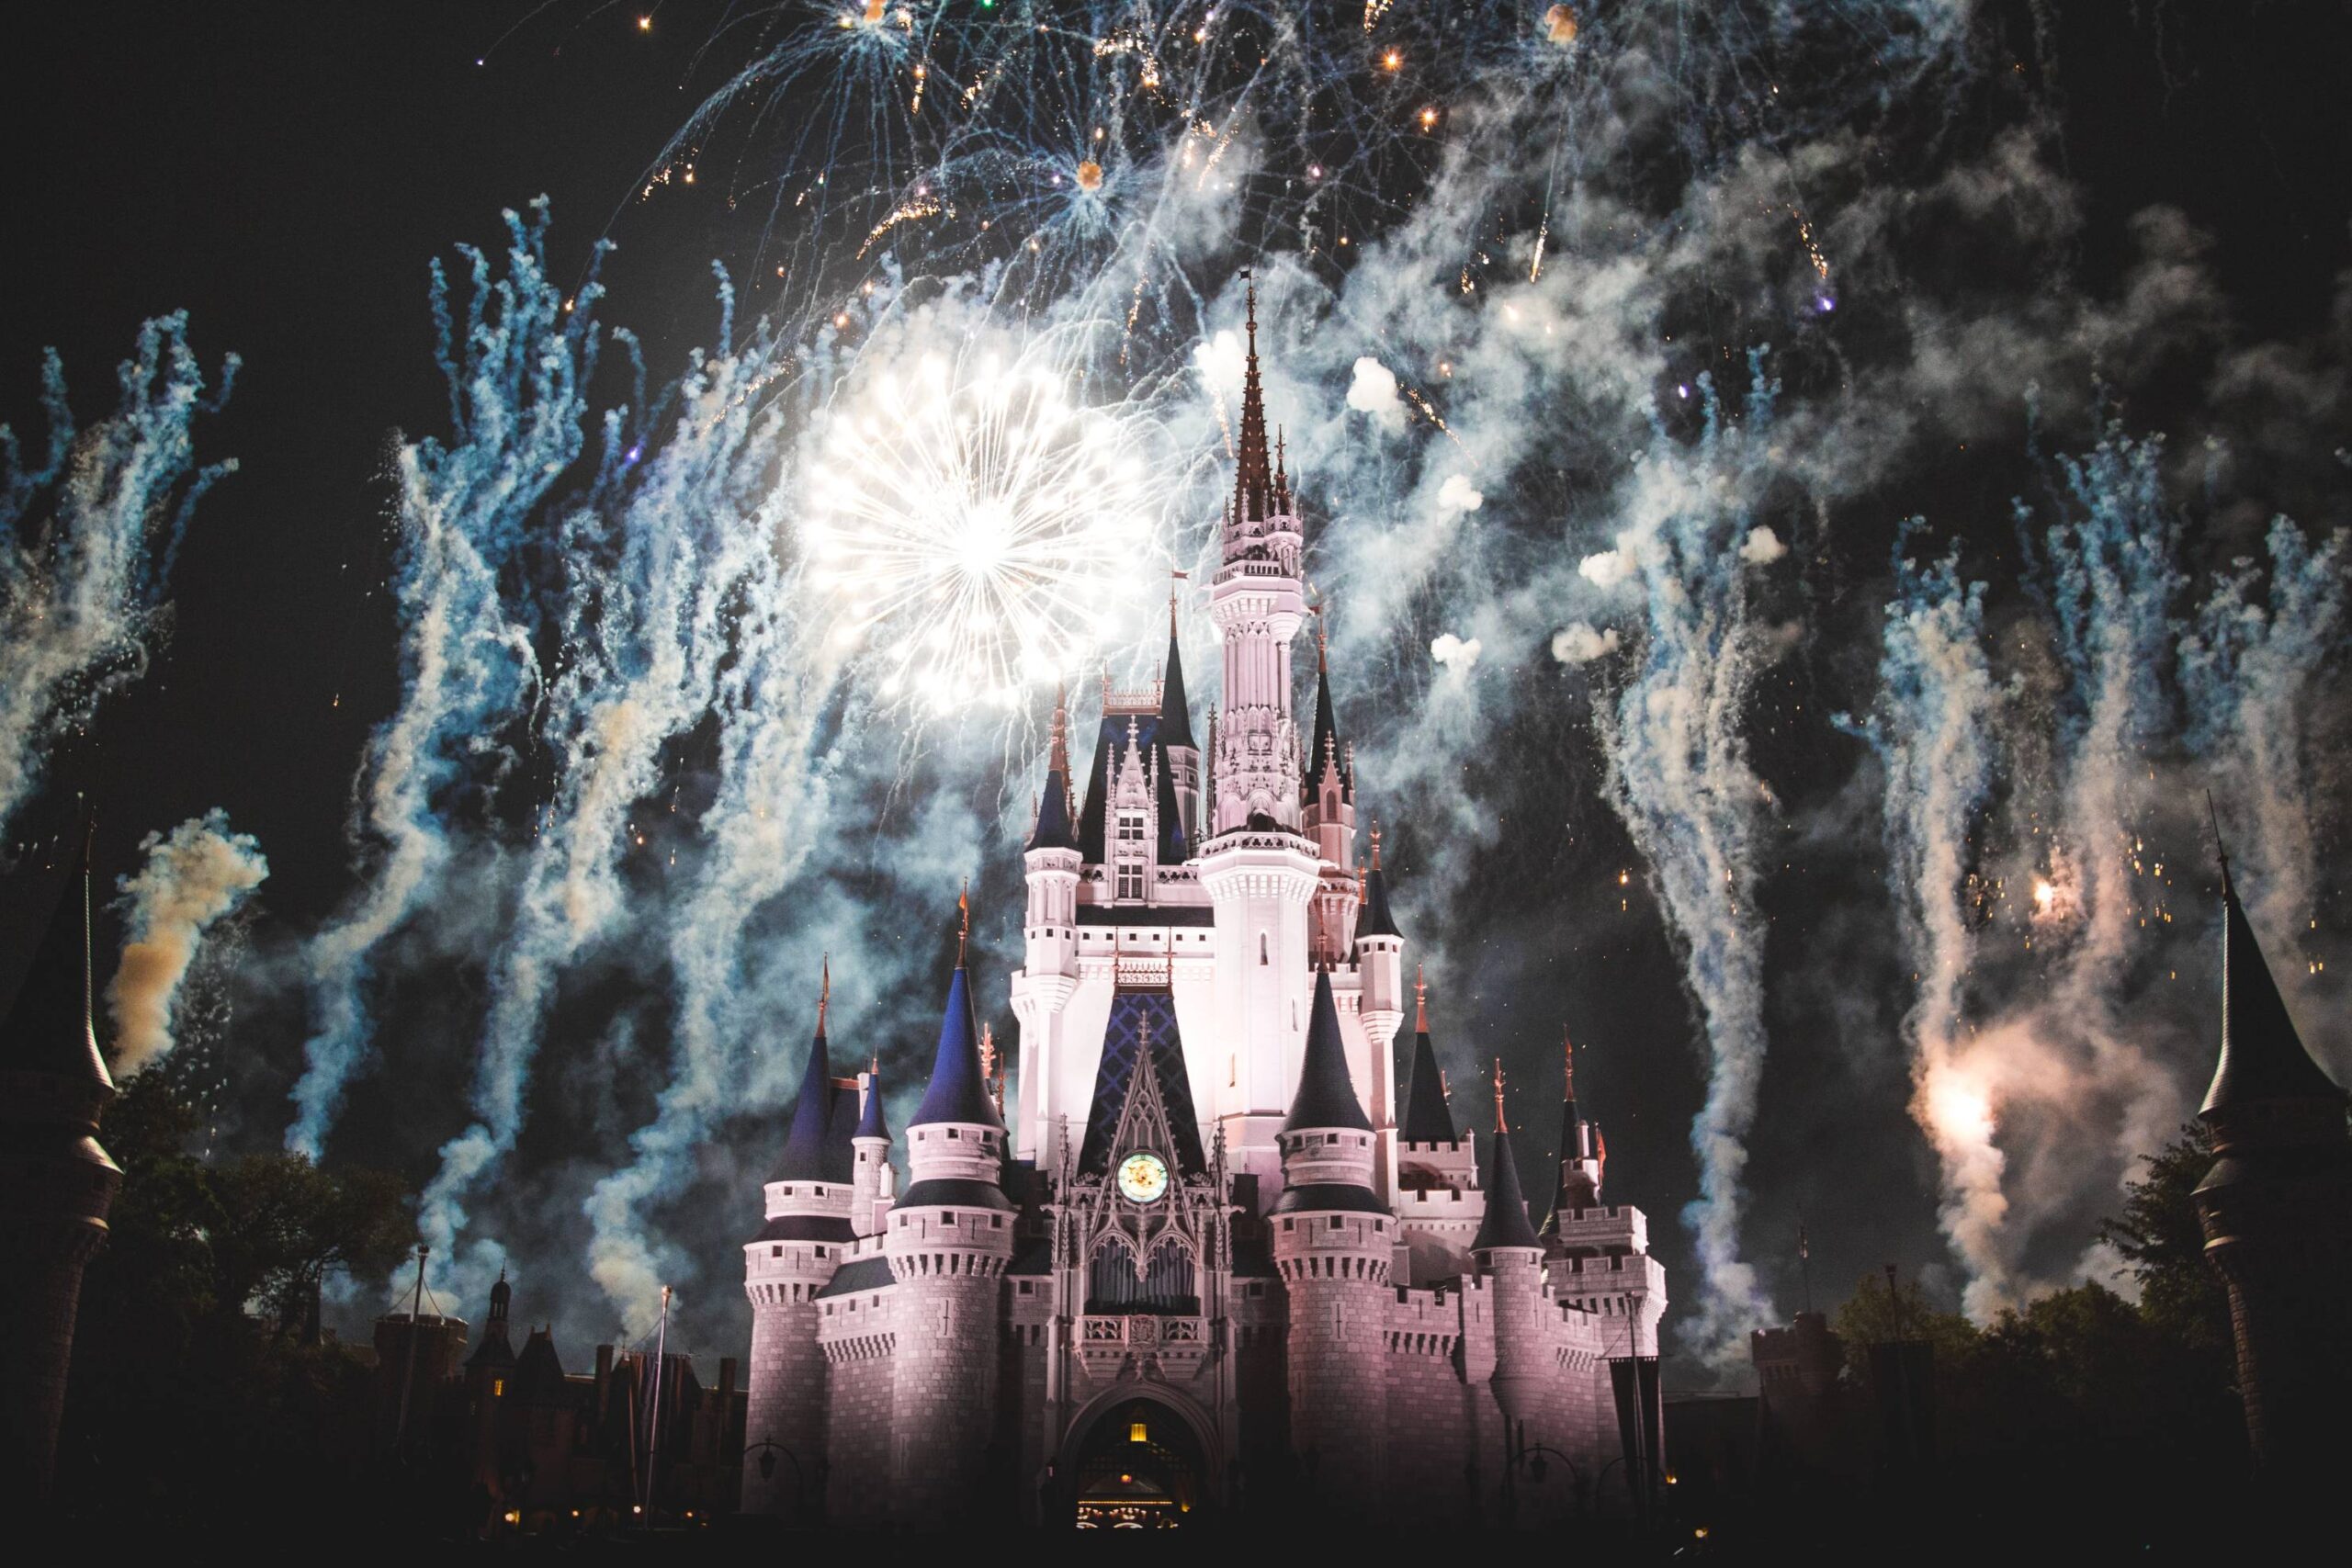 Fireworks over the Disney Castle